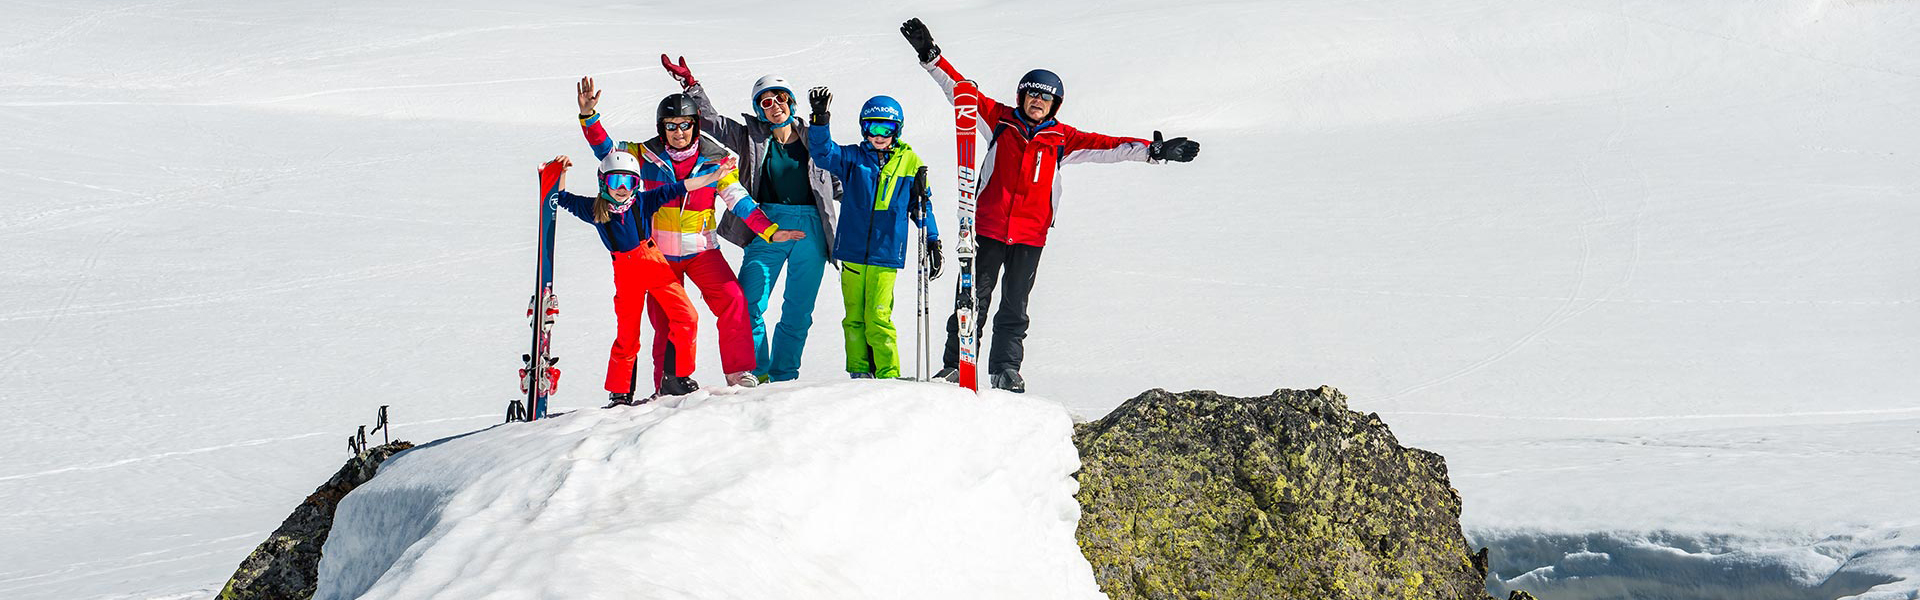 Chamrousse family holidays ski snow activity winter mountain resort grenoble lyon isere french alps france - © Images-et-reves.fr